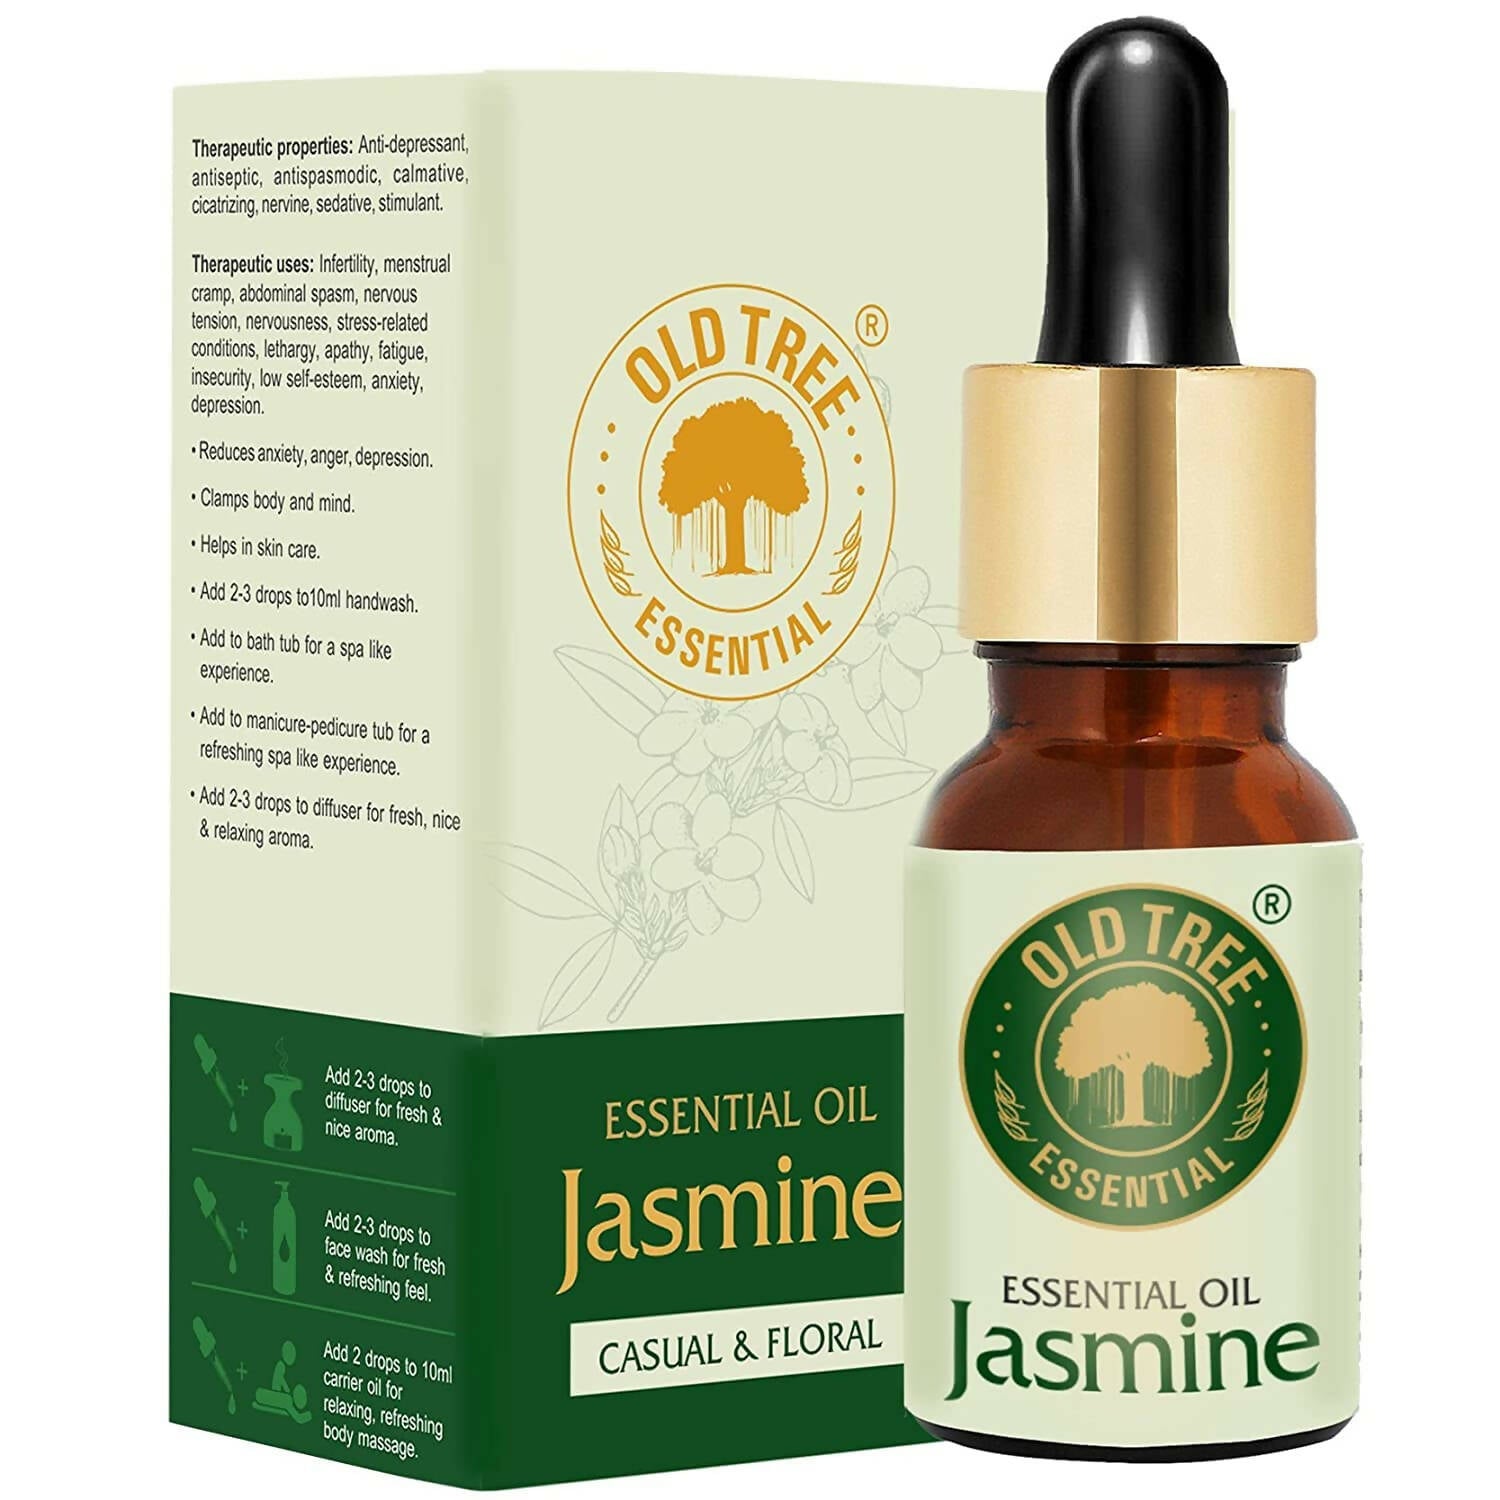 Buy Online Jasmine Essential Oil at Low Price